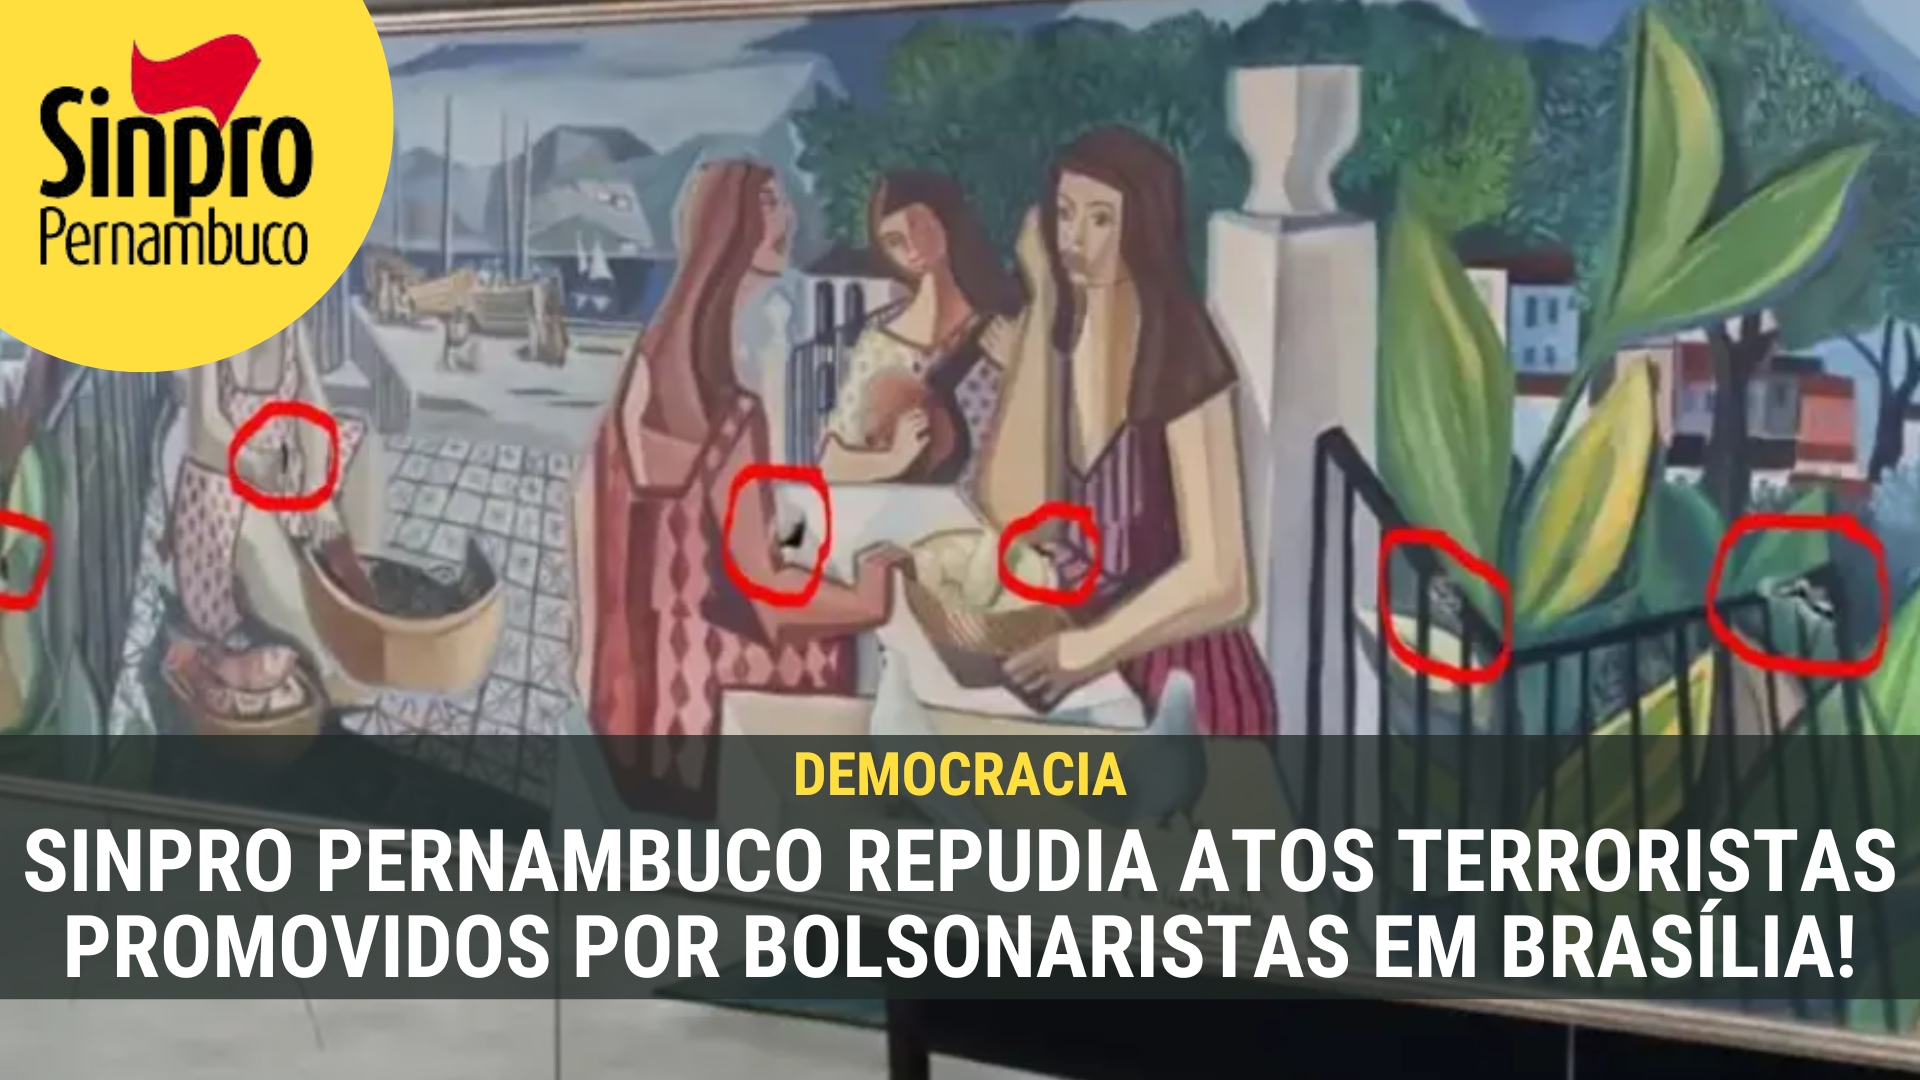 SINPRO PERNAMBUCO REPUDIA ATOS TERRORISTAS PROMOVIDOS POR BOLSONARISTAS EM BRASÍLIA!